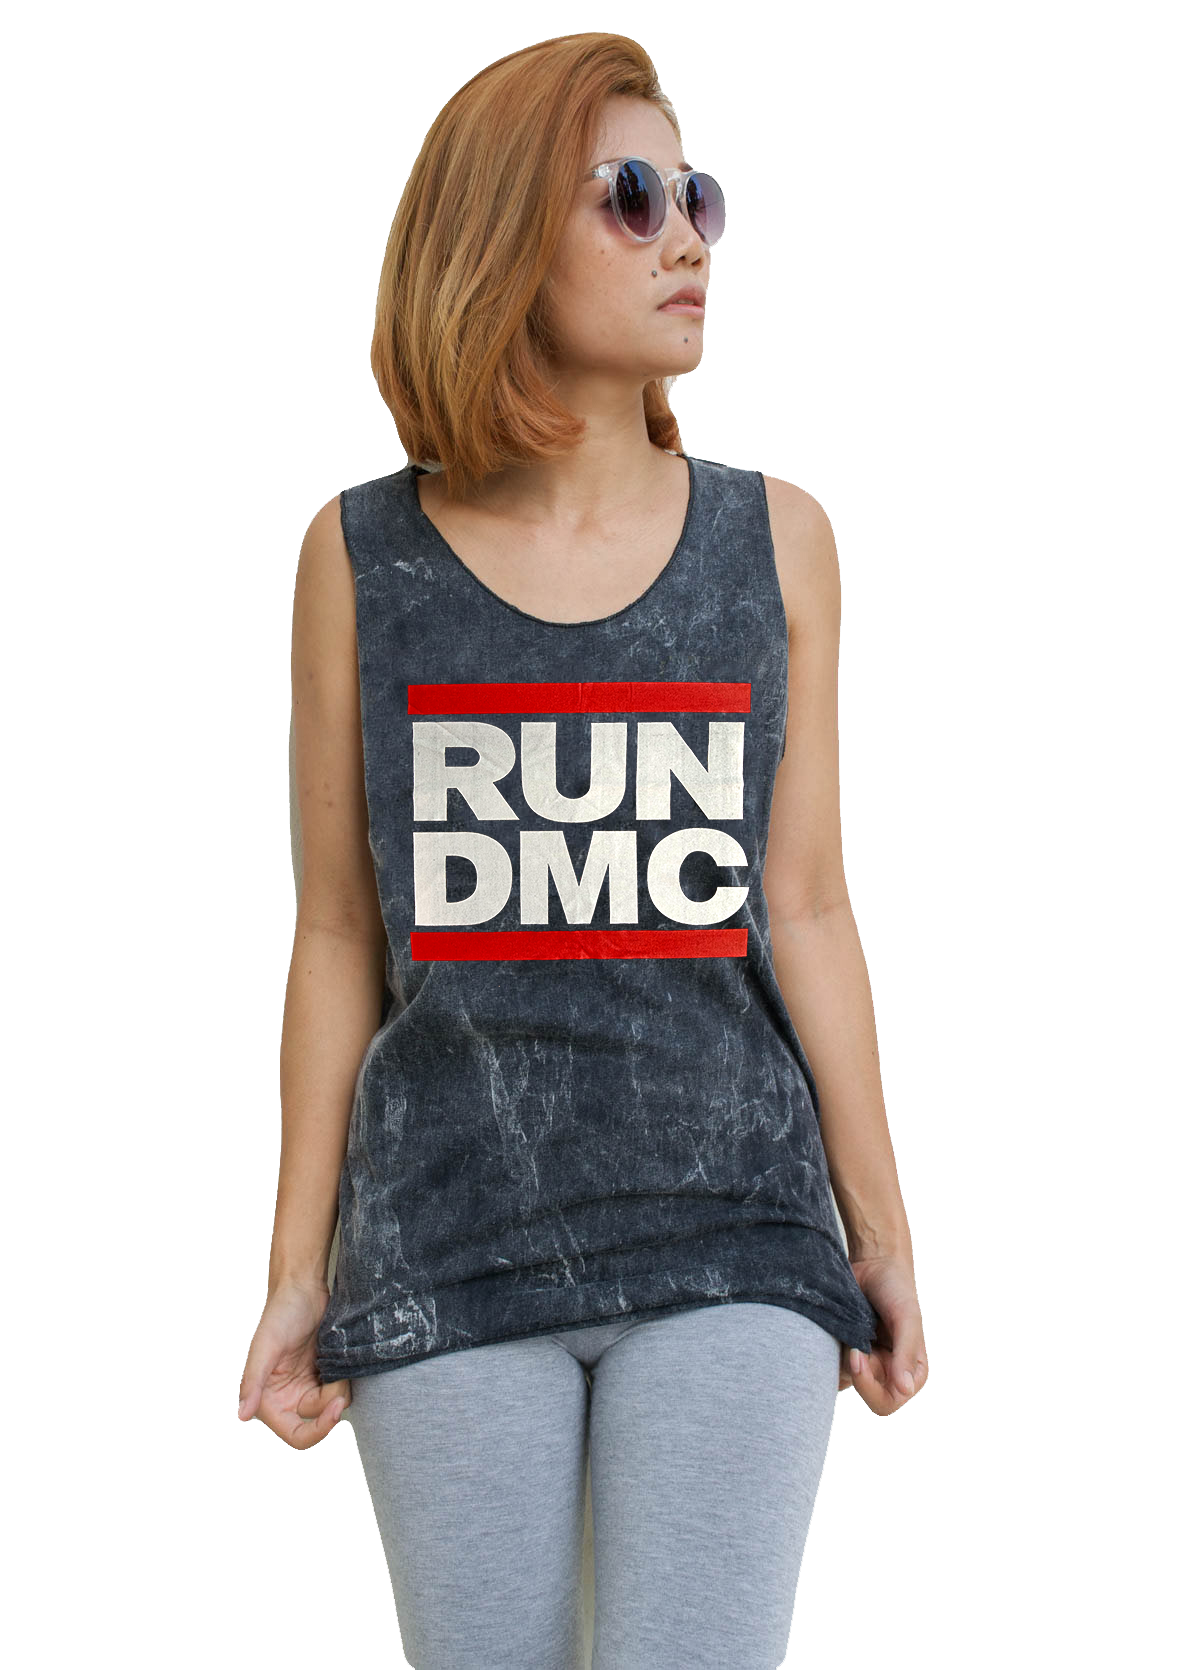 Unisex RUN DMC Tank-Top Singlet vest Sleeveless T-shirt